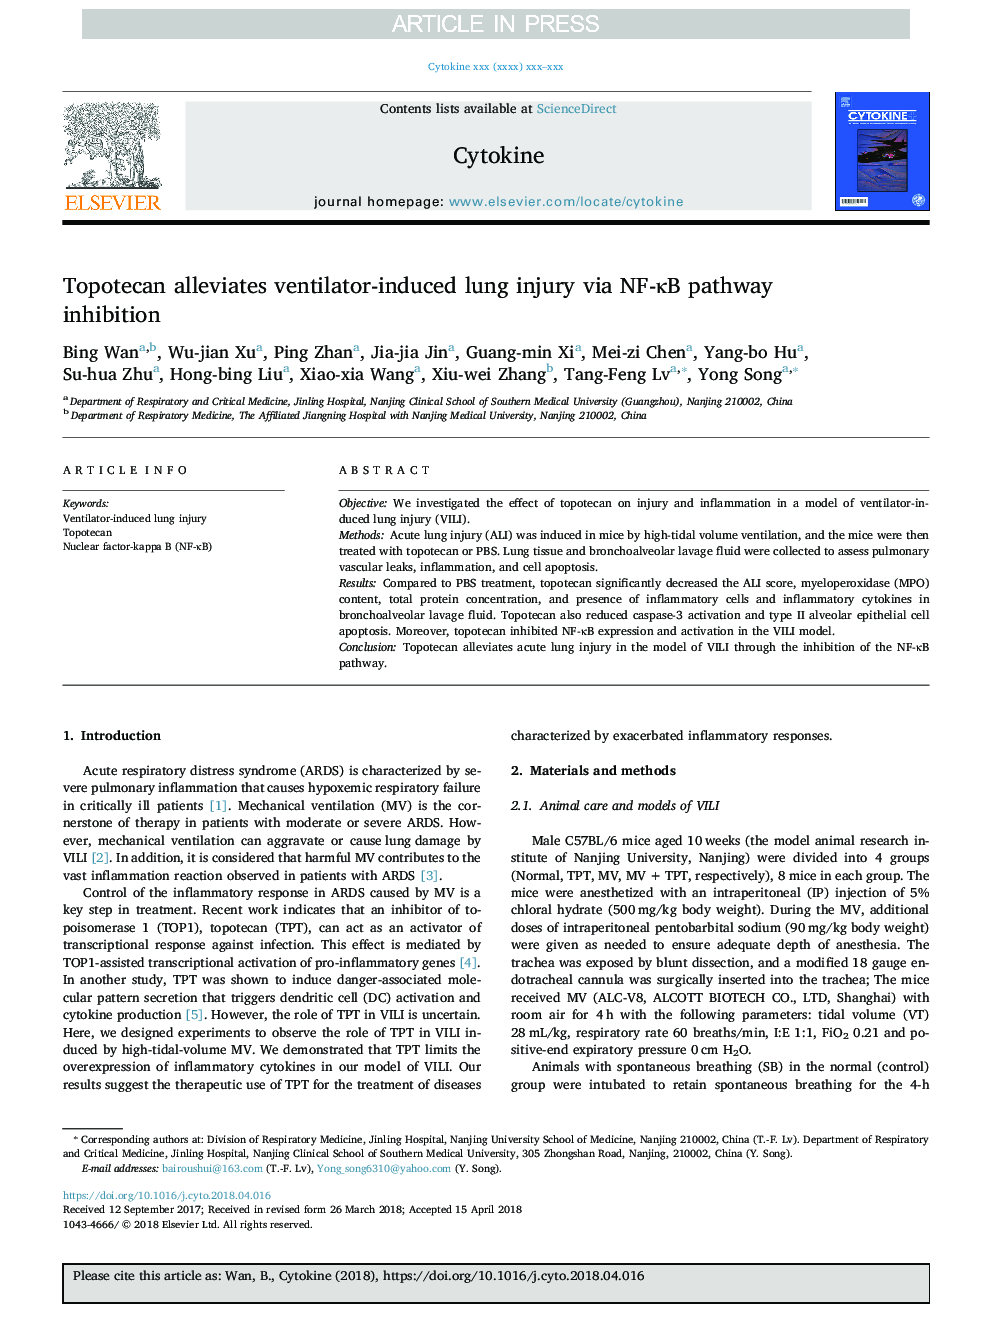 Topotecan alleviates ventilator-induced lung injury via NF-ÎºB pathway inhibition